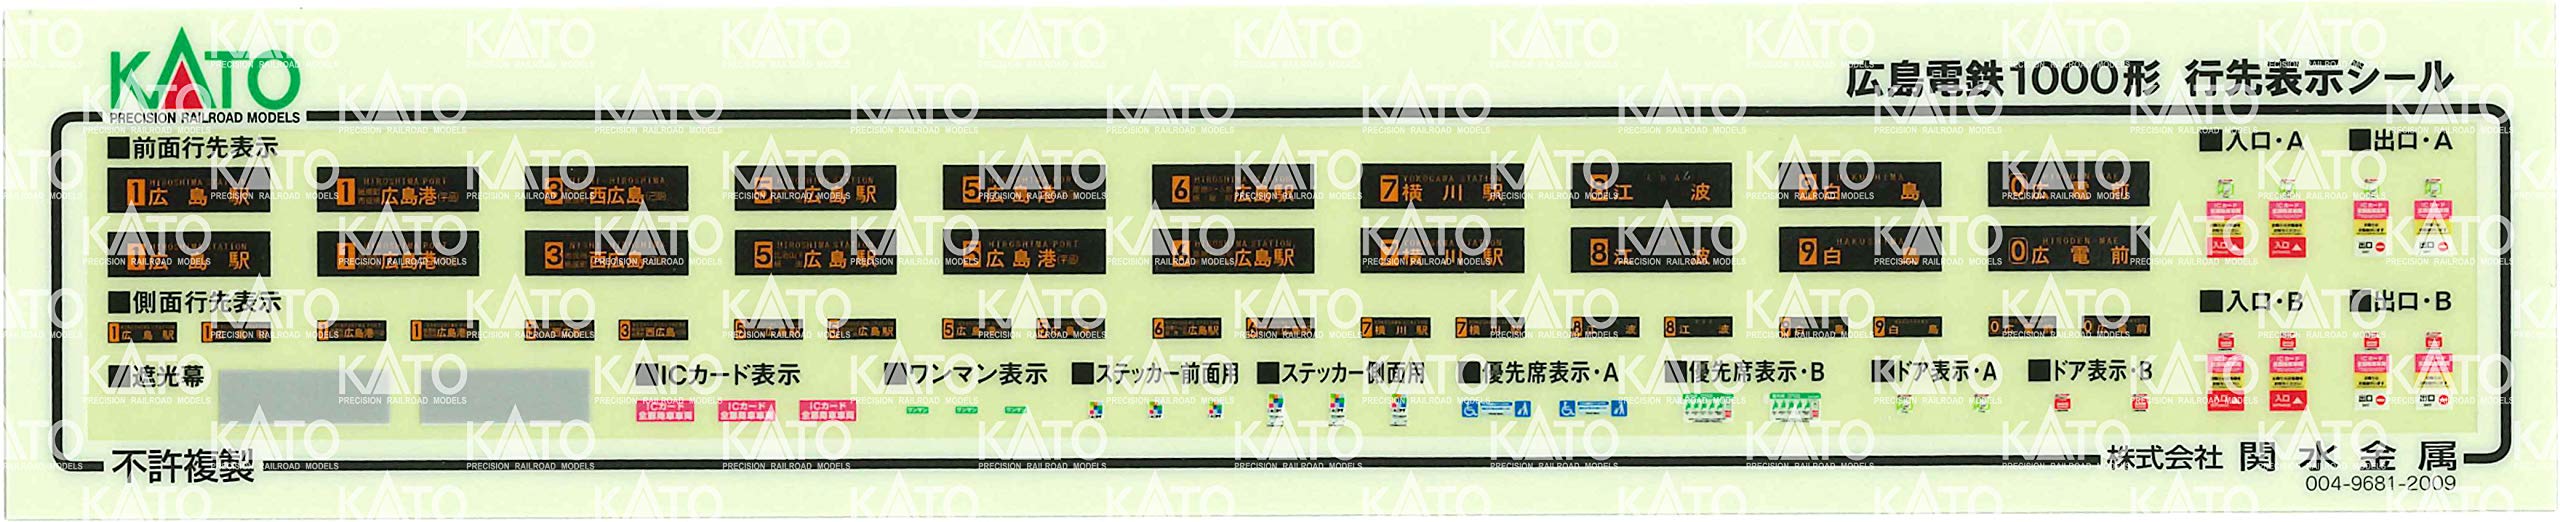 KATO N gauge Hiroden 1000 LRT 2-Car Set PICCOLO & PICCOLA 10-1604 Model Train_6